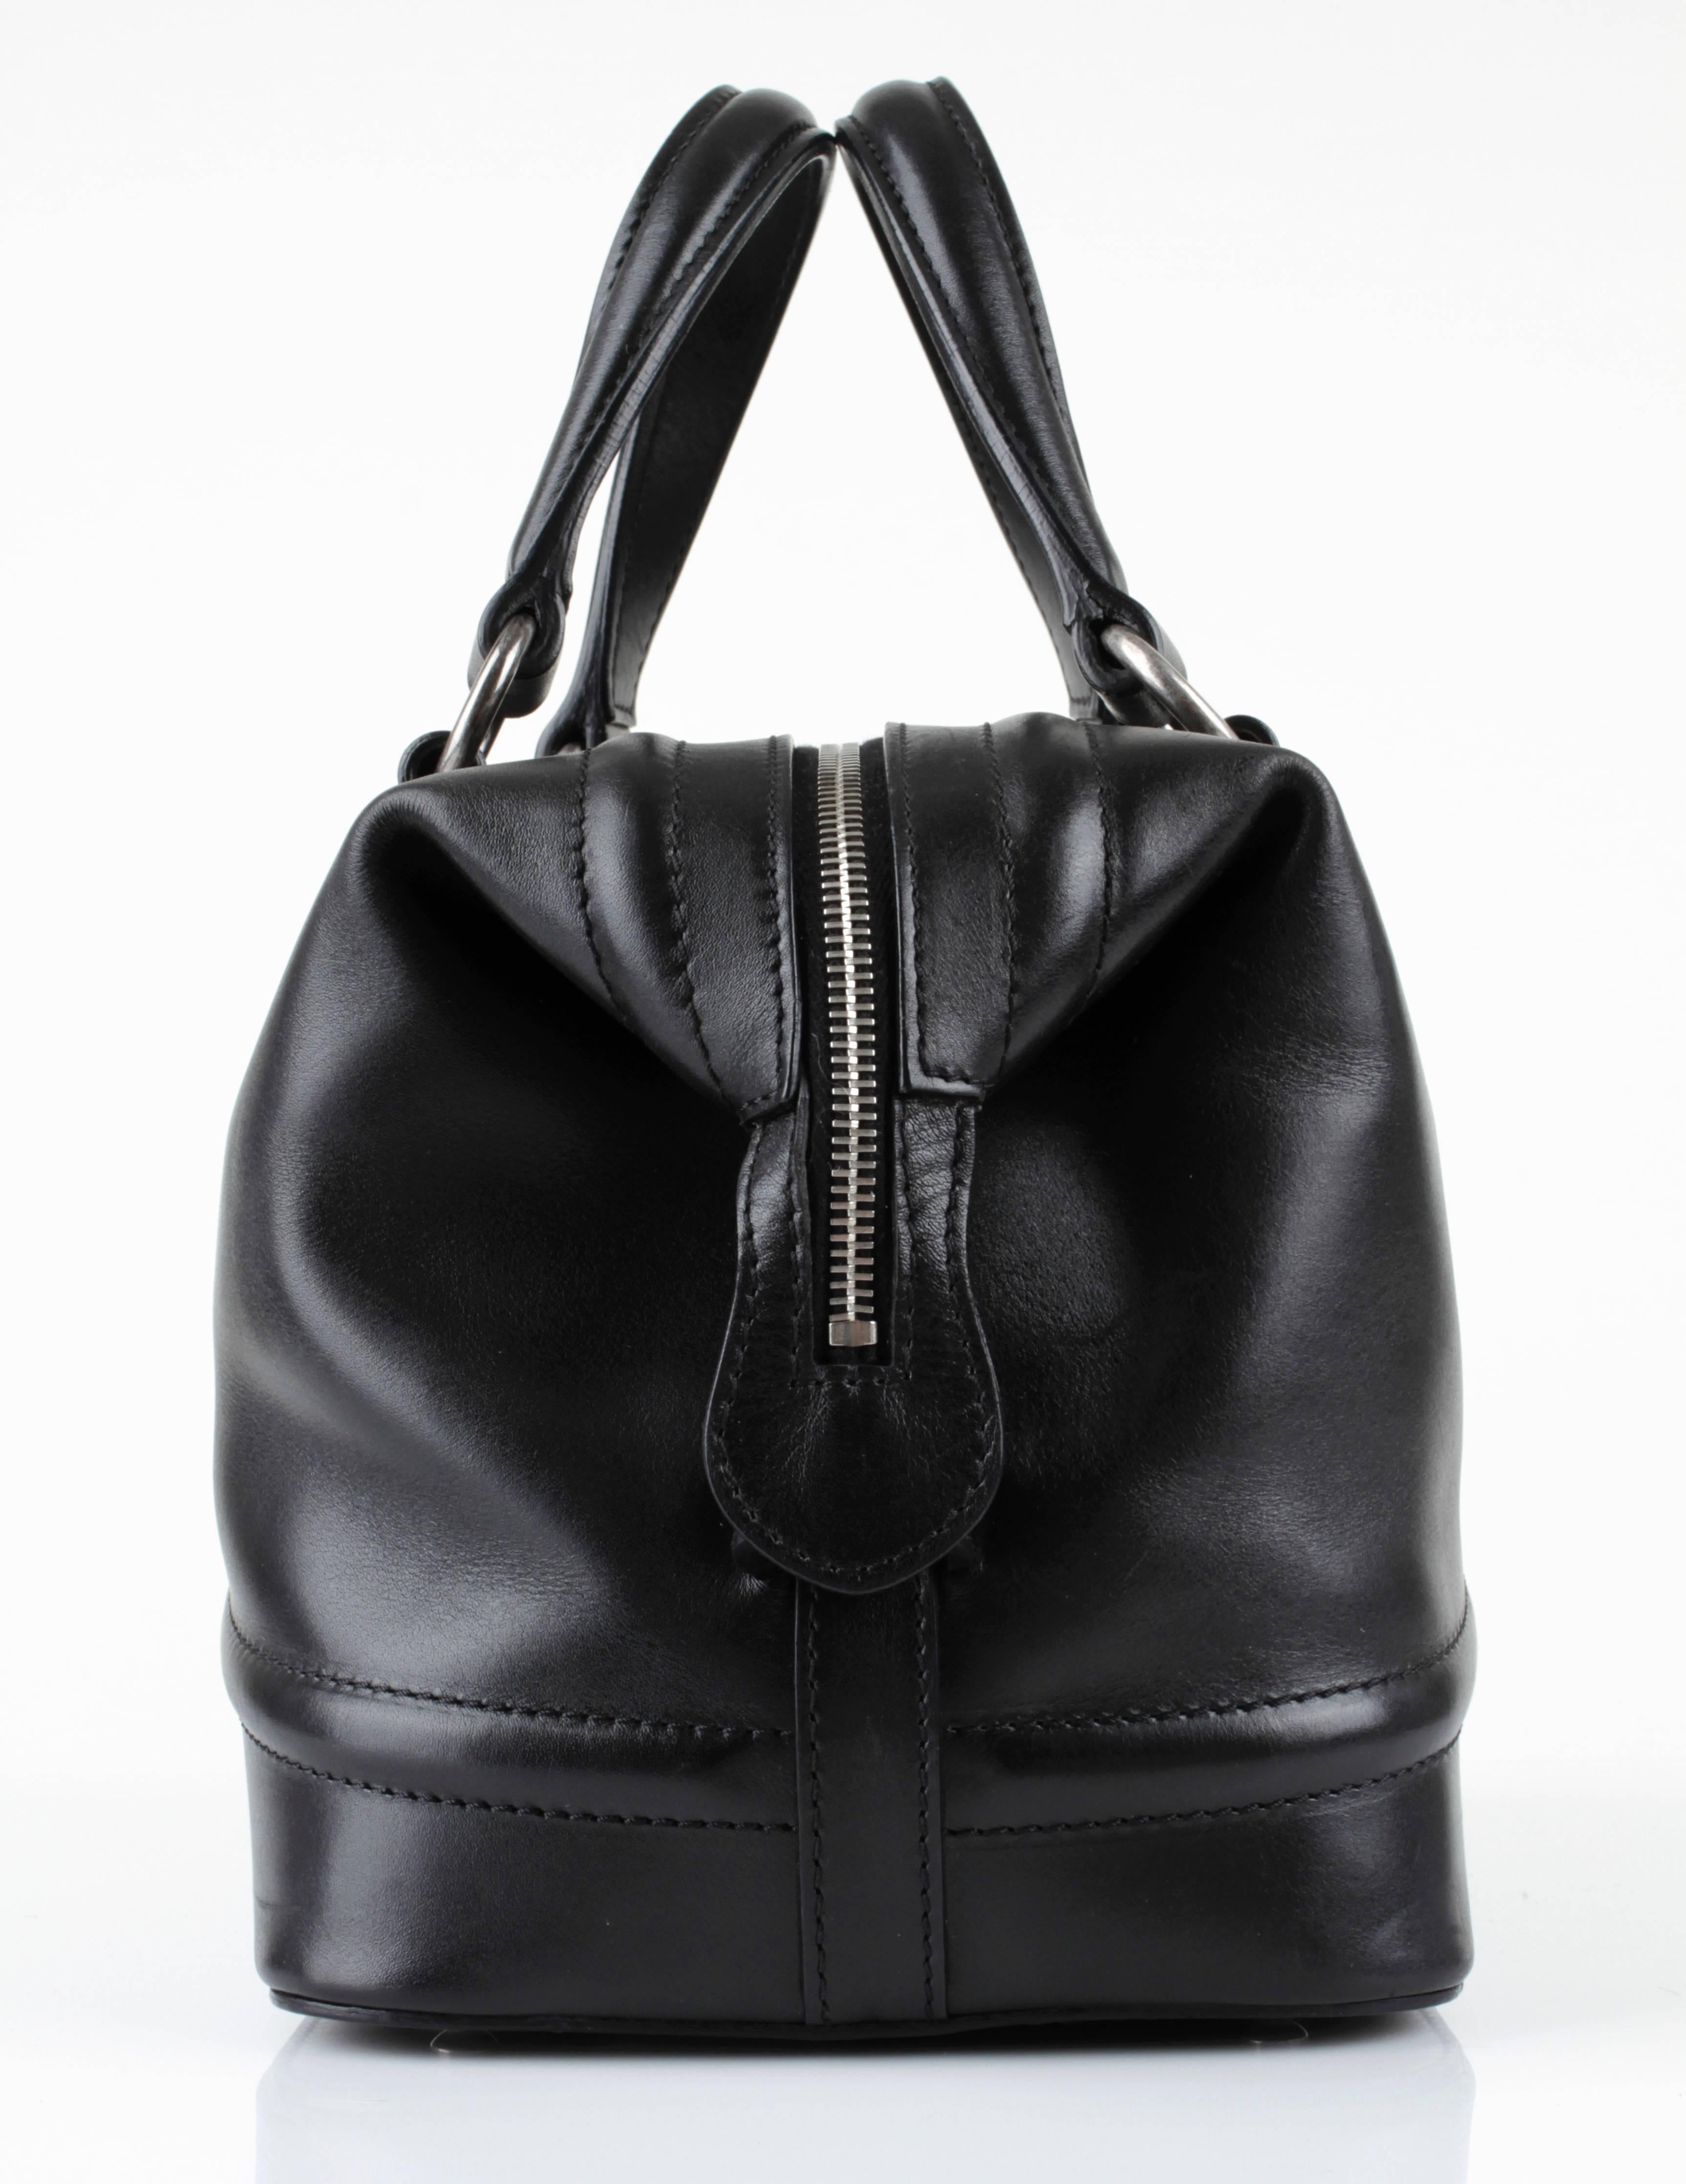 black satchel purse